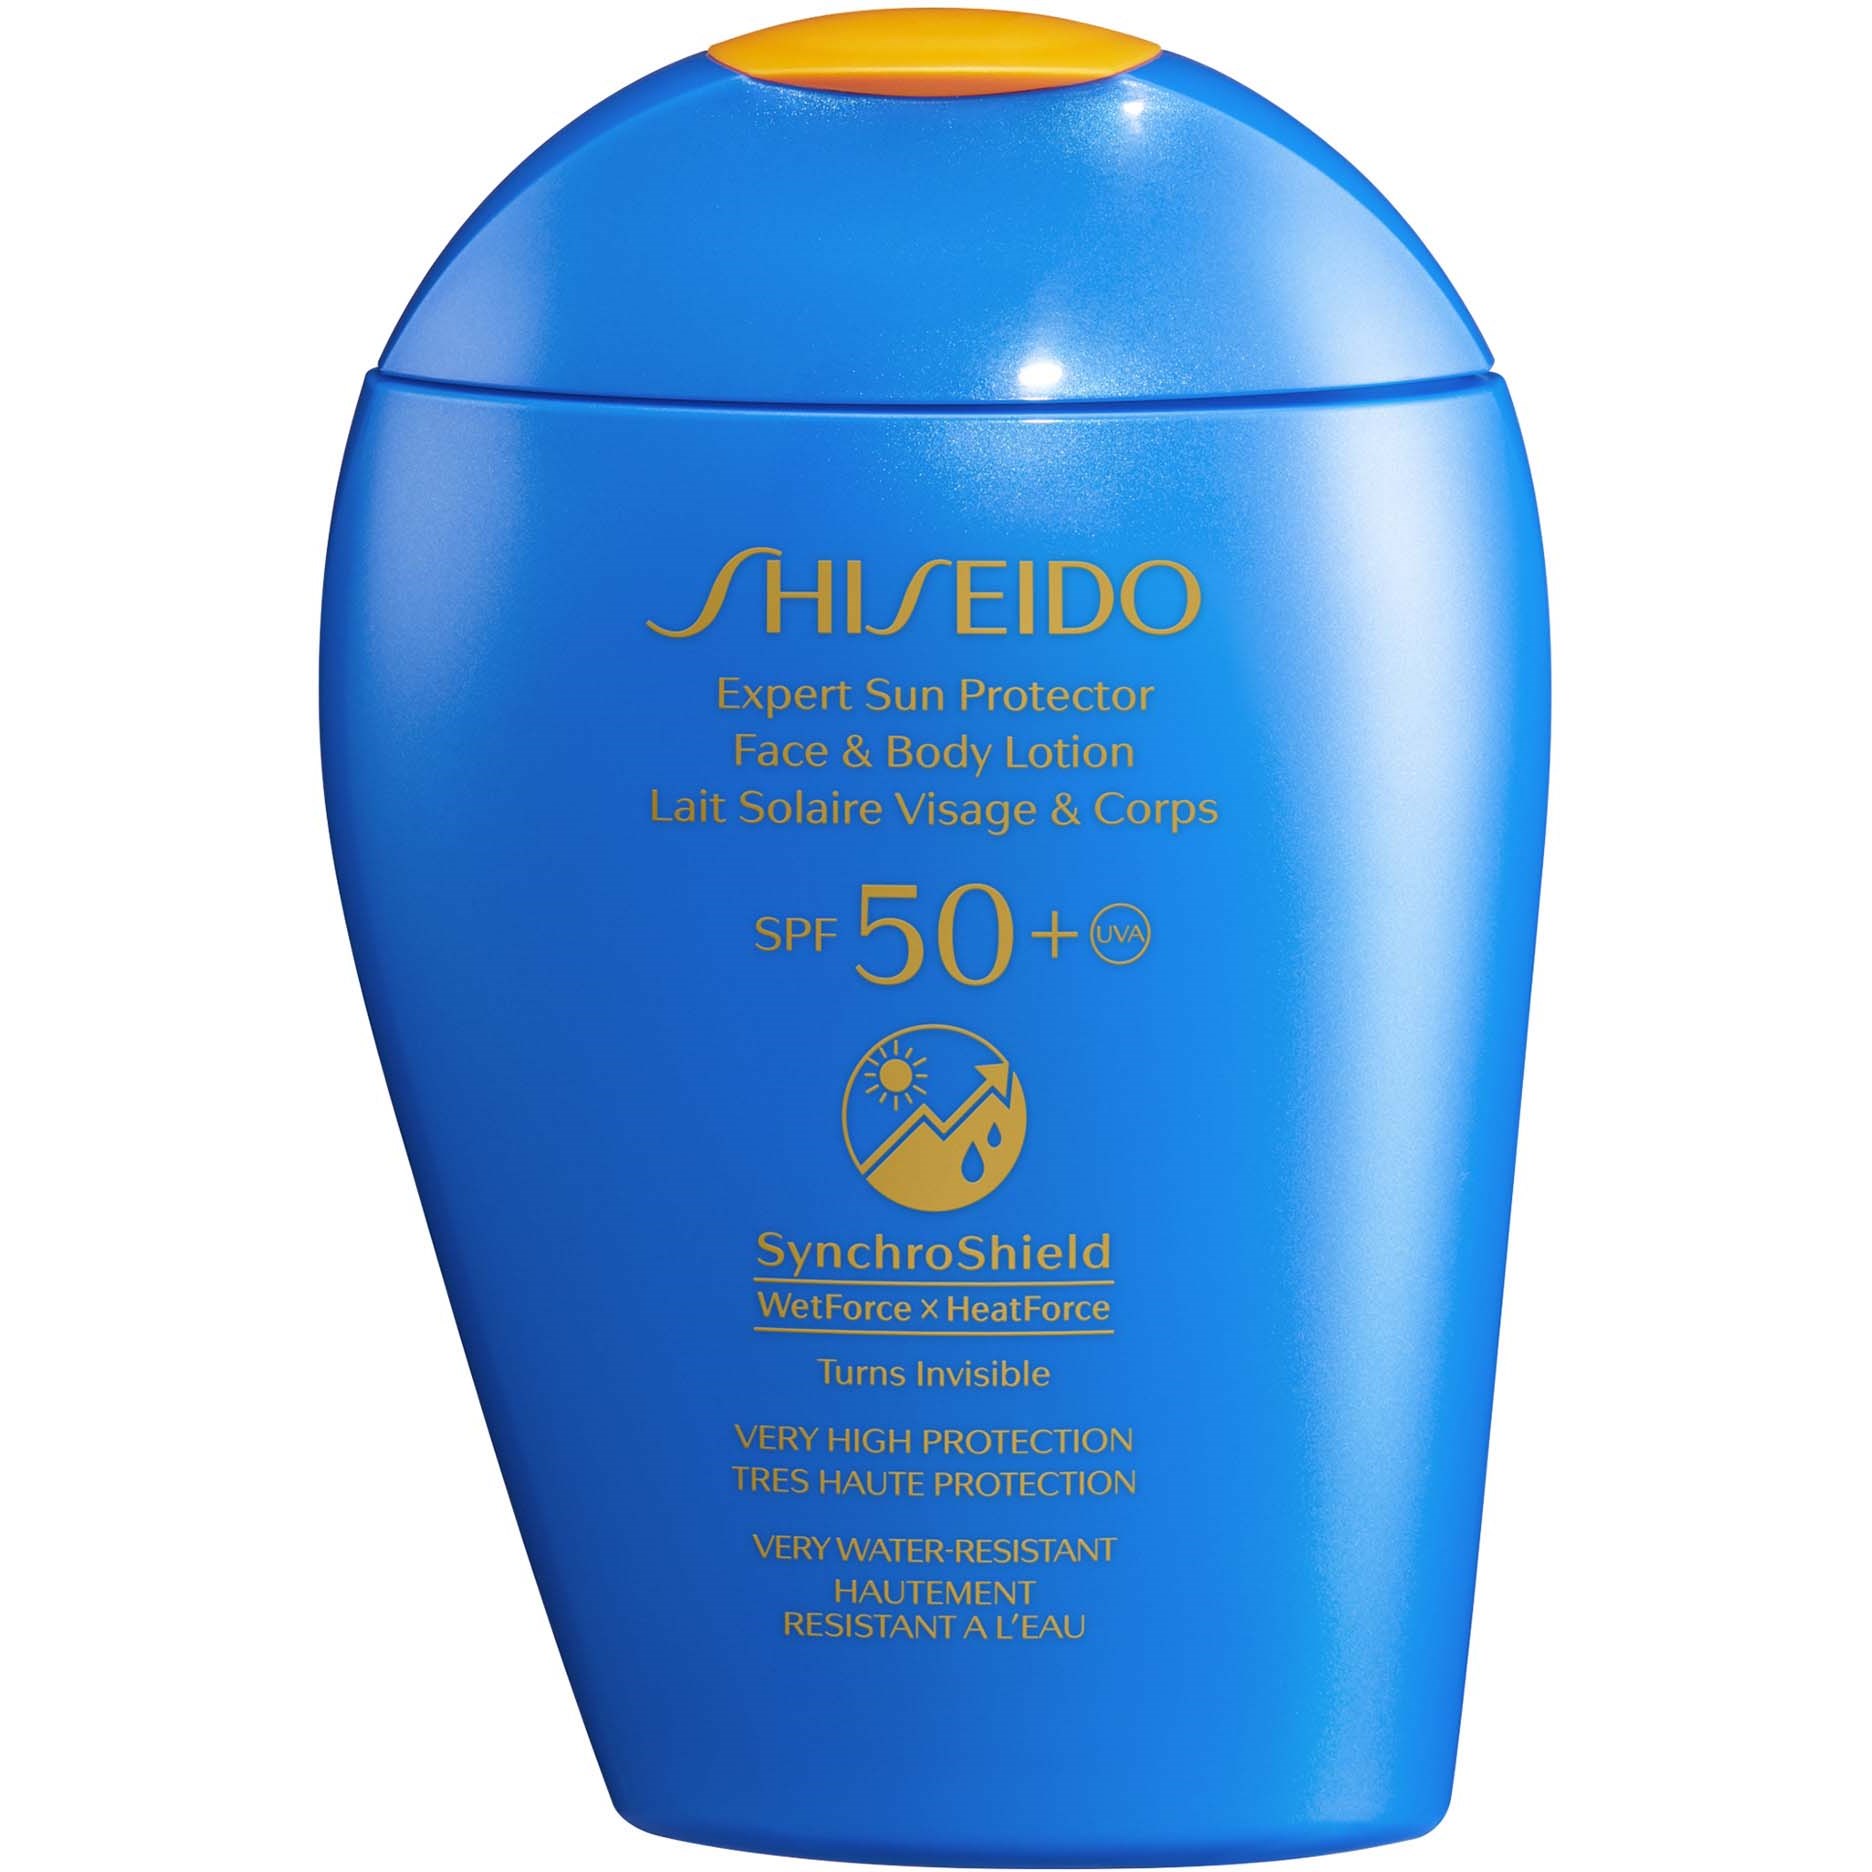 Shiseido Sun 50+ experts pro lotion